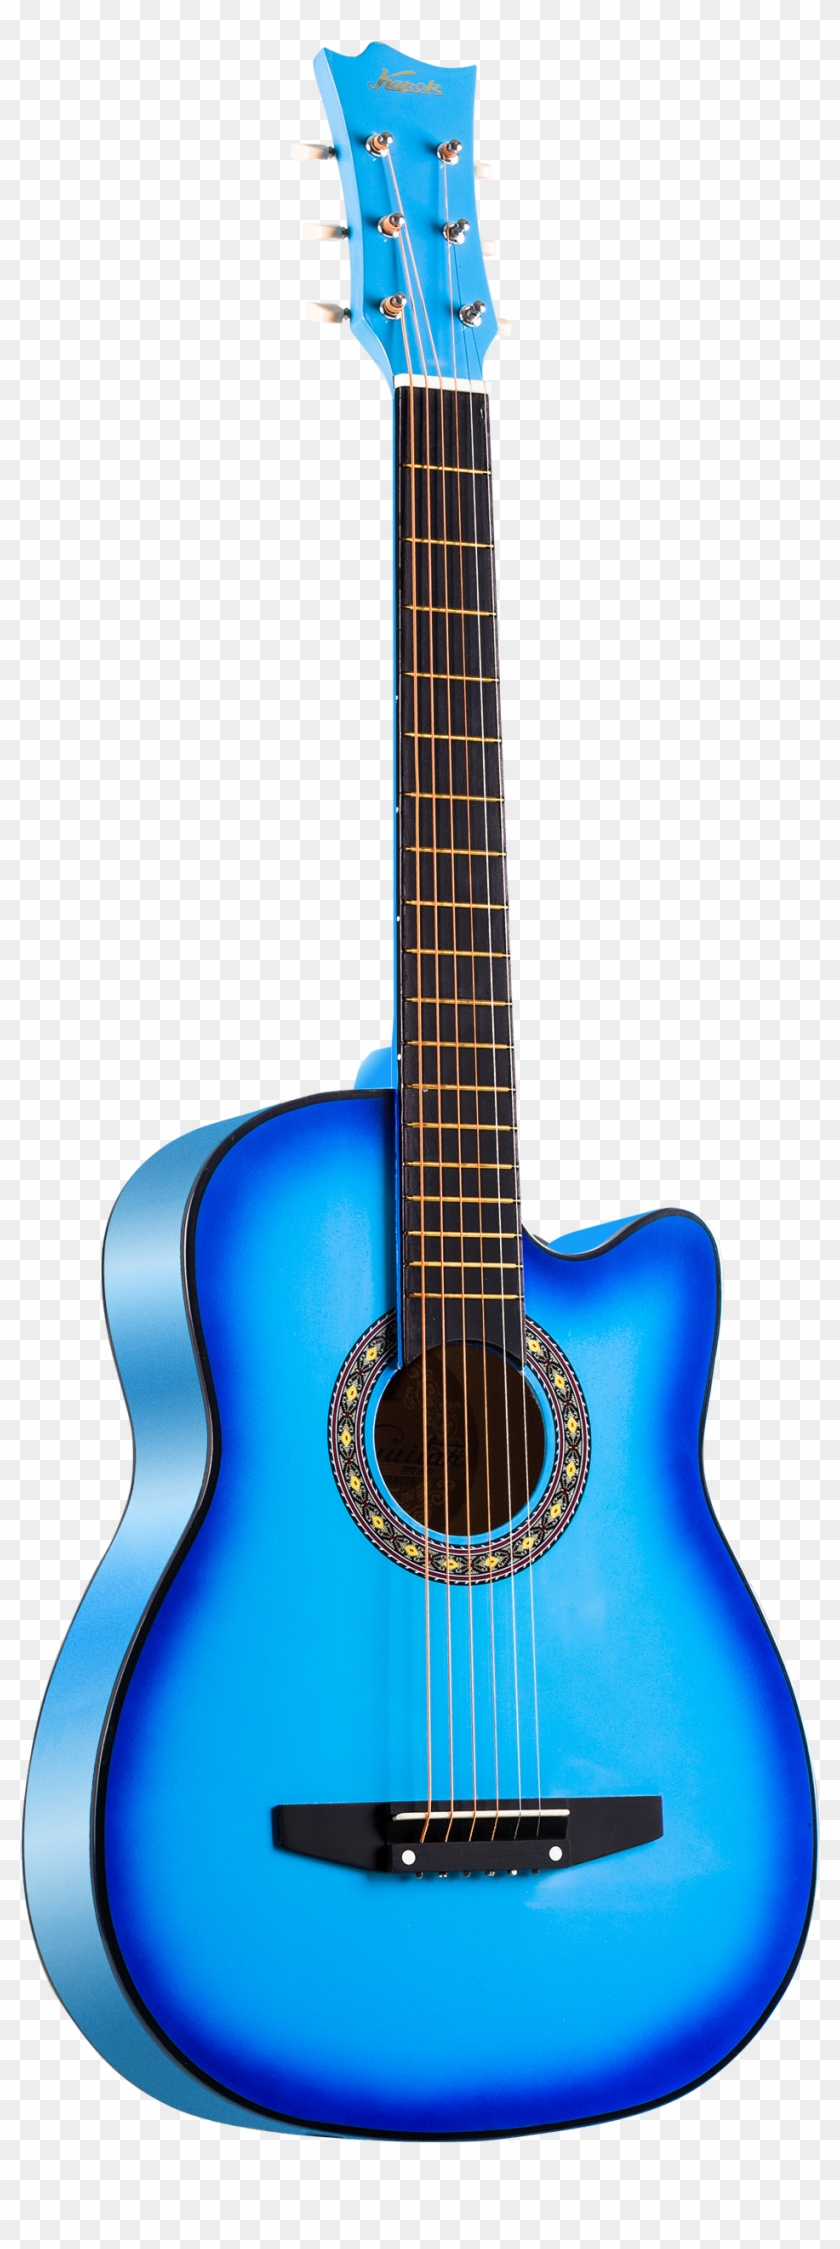 Blue Tiple Guitar Instrument Acoustic-electric Acoustic - Blue Guitar Png Clipart #2711855